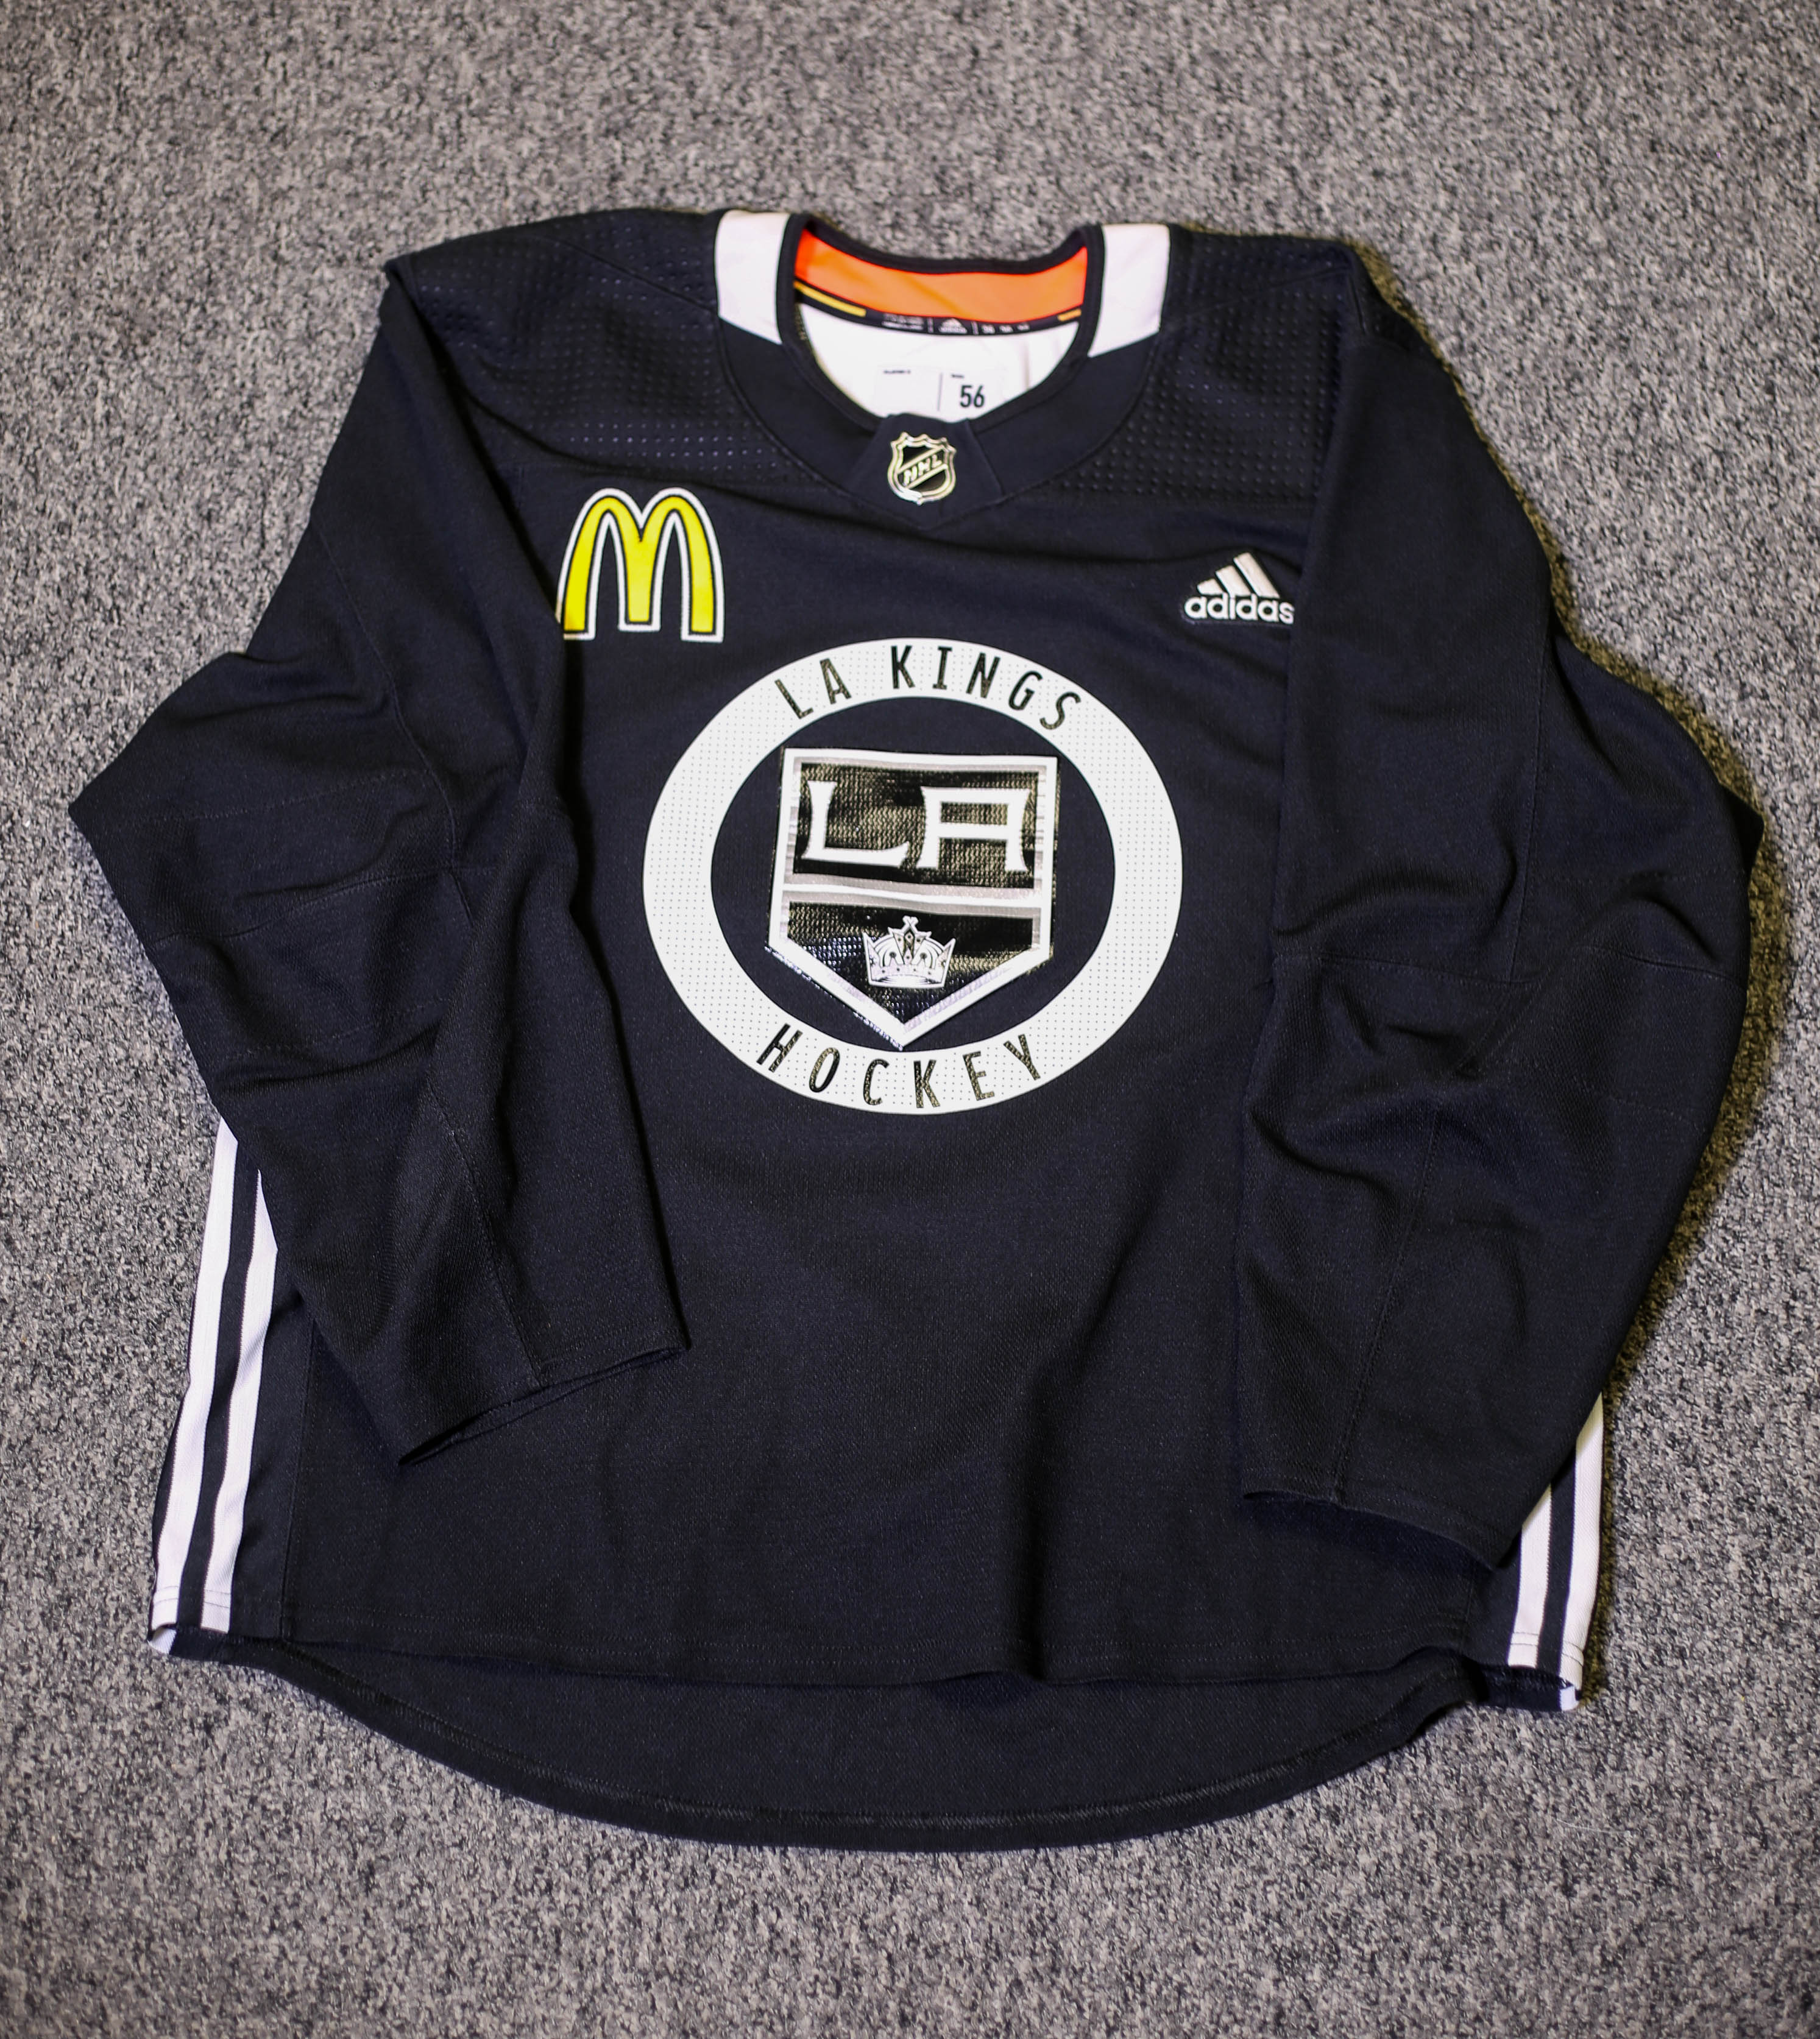 Adidas Black Goalie Cut NHL Tampa Bay Lightning Practice Jersey